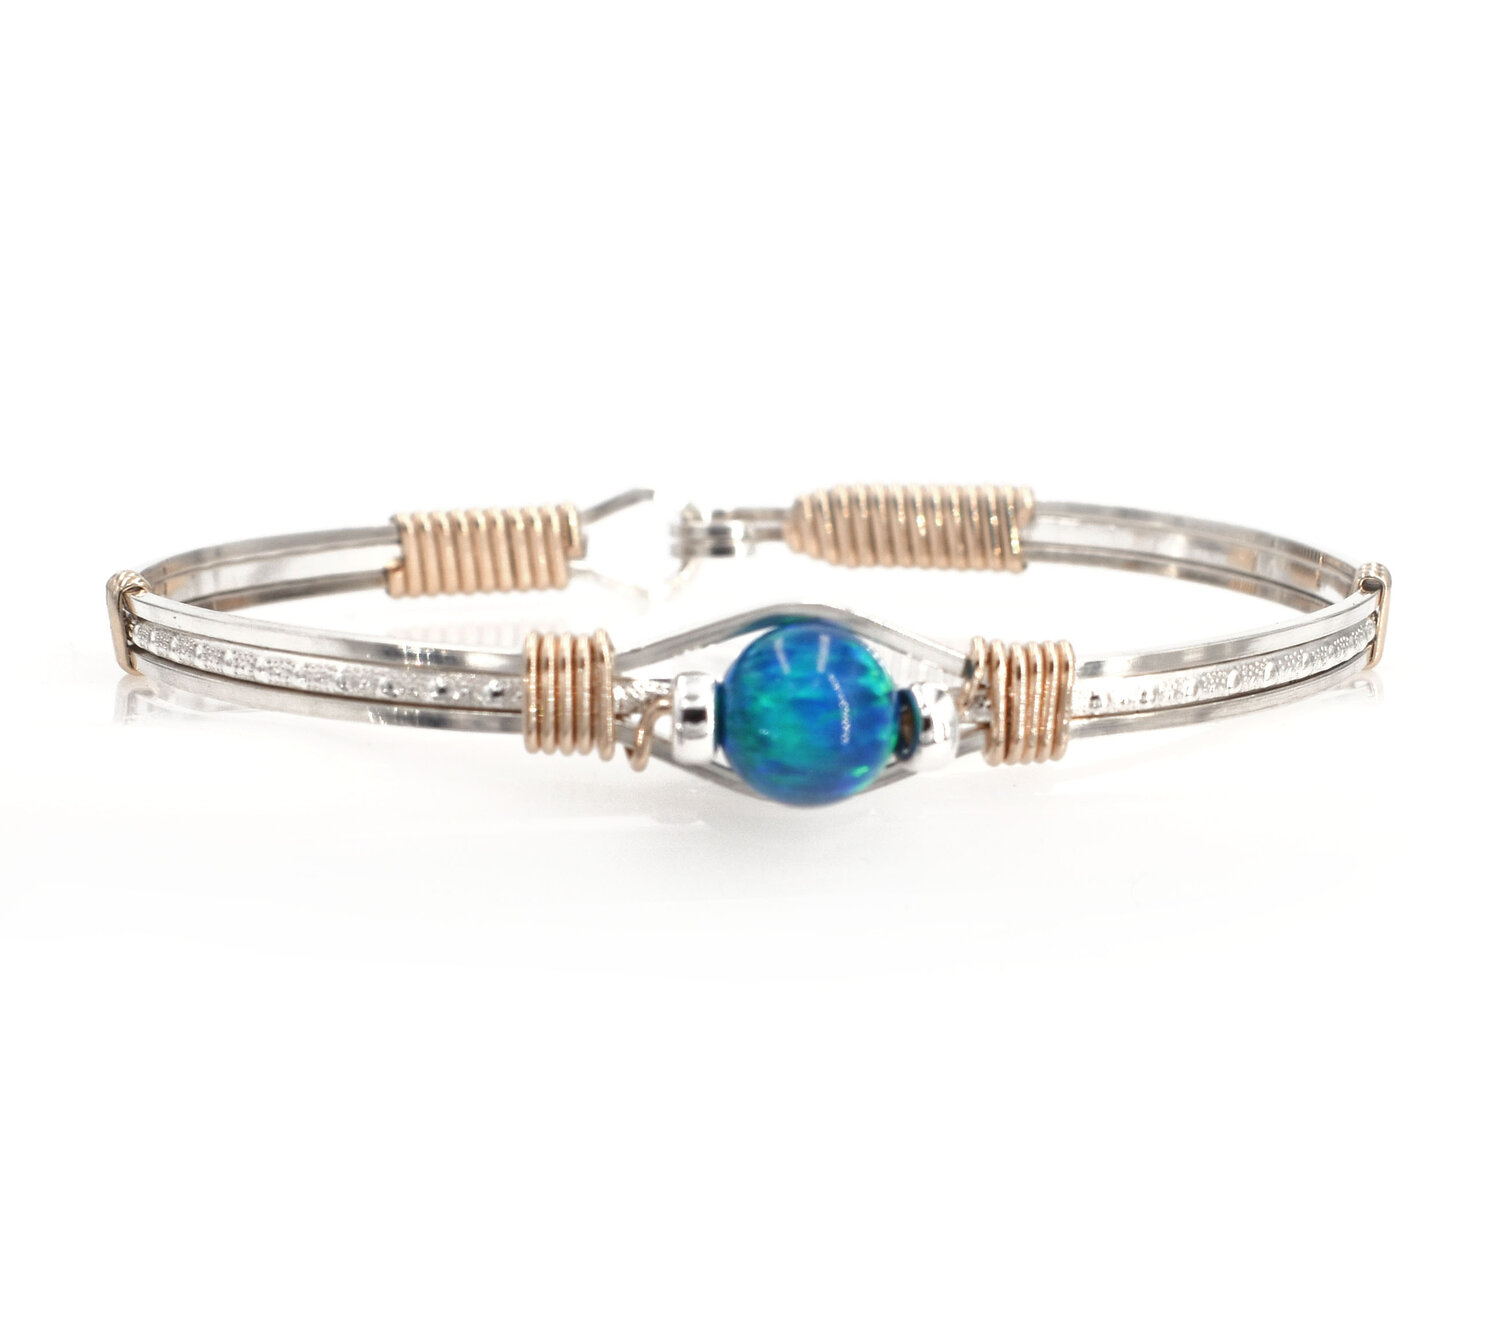 J. Stoddard Artisan Jewelry, Jason Stoddard Designs, handmade bracelets ...